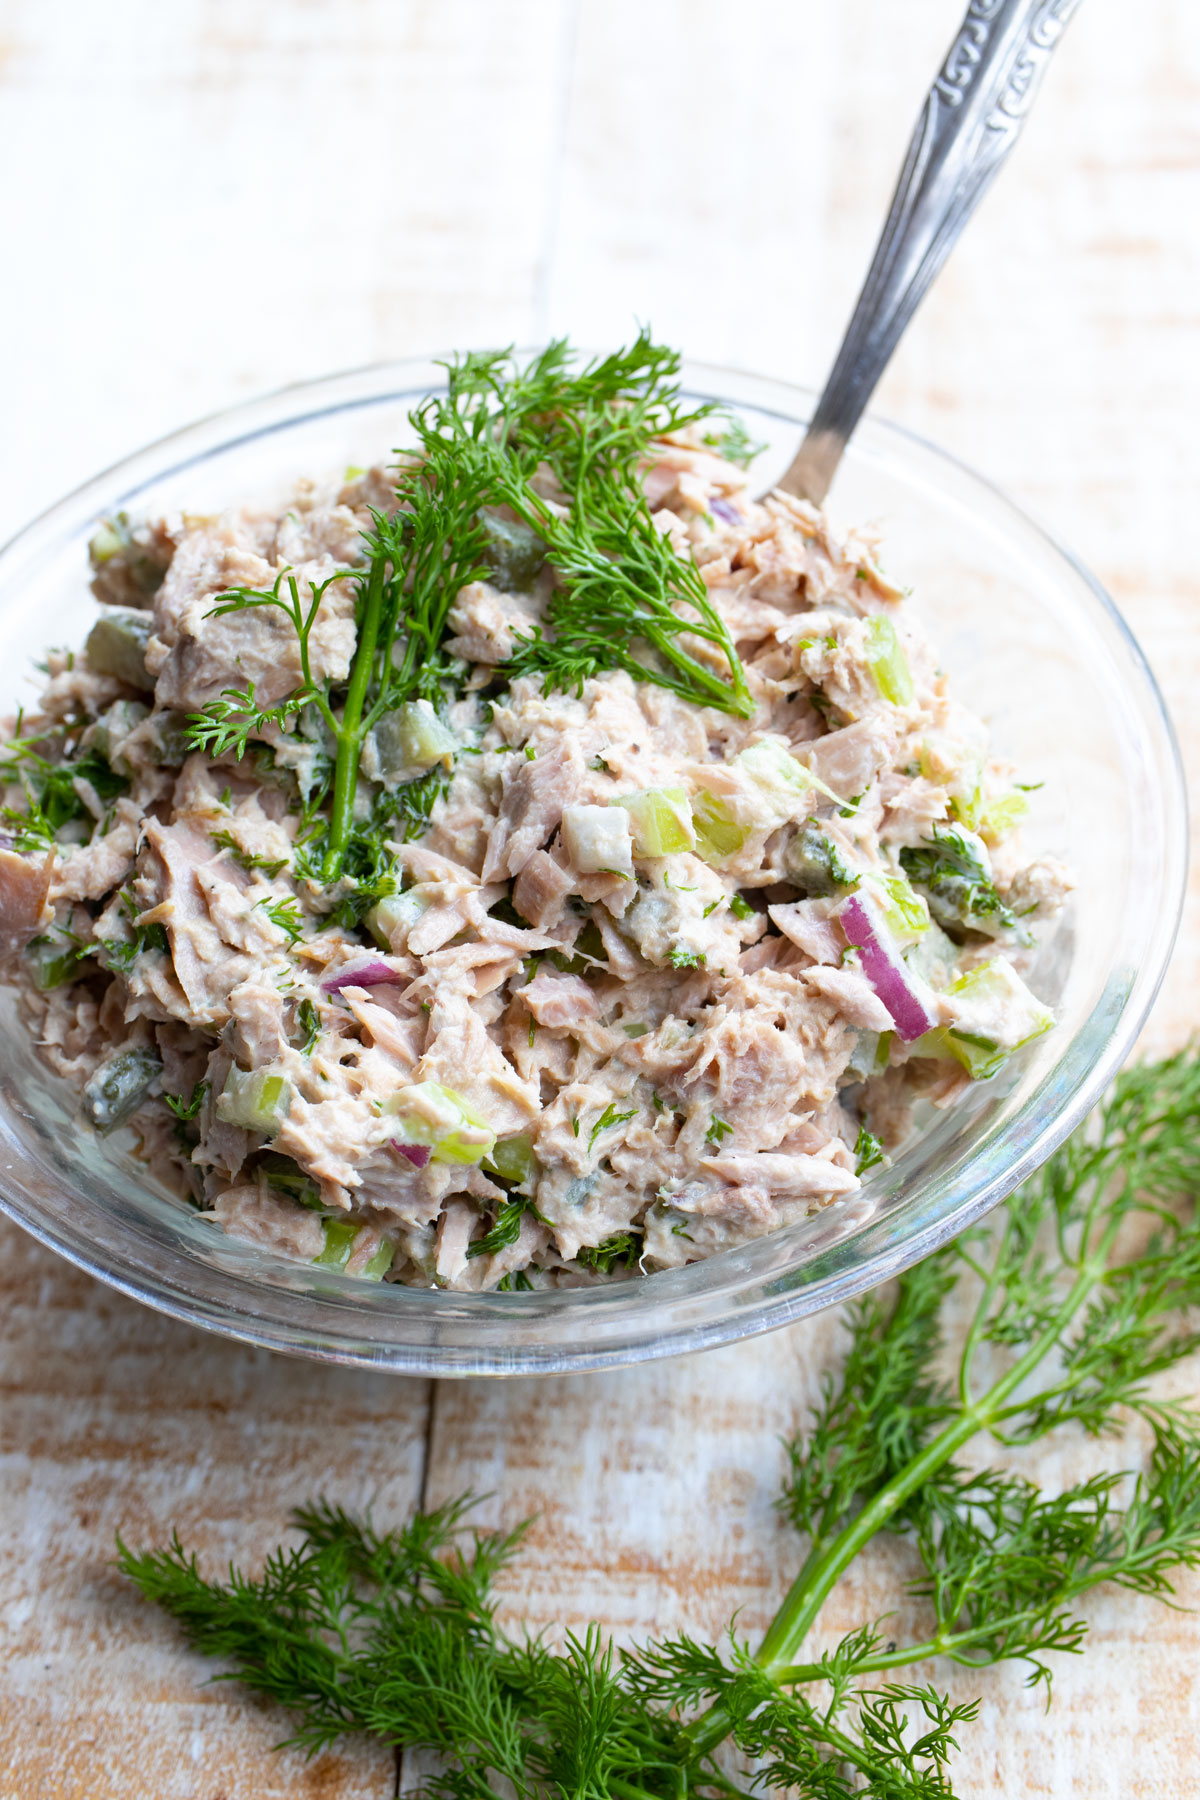 Tuna salad in a bowl.